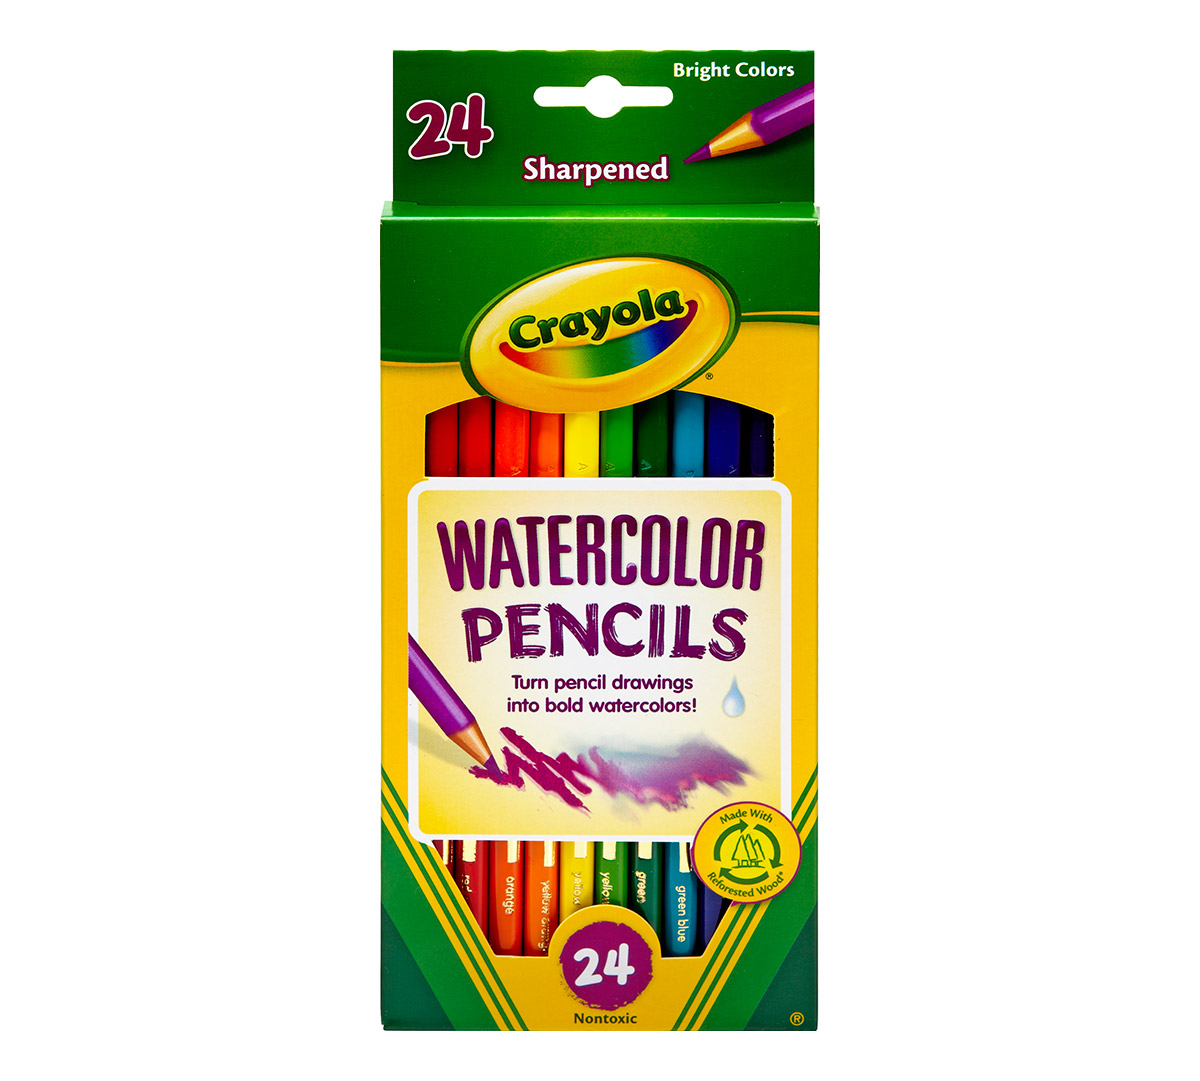 https://shop.crayola.com/on/demandware.static/-/Sites-crayola-storefront/default/dw4fe05285/images/68-4304-0-206_Watercolor-Pencils_24ct_F1.jpg